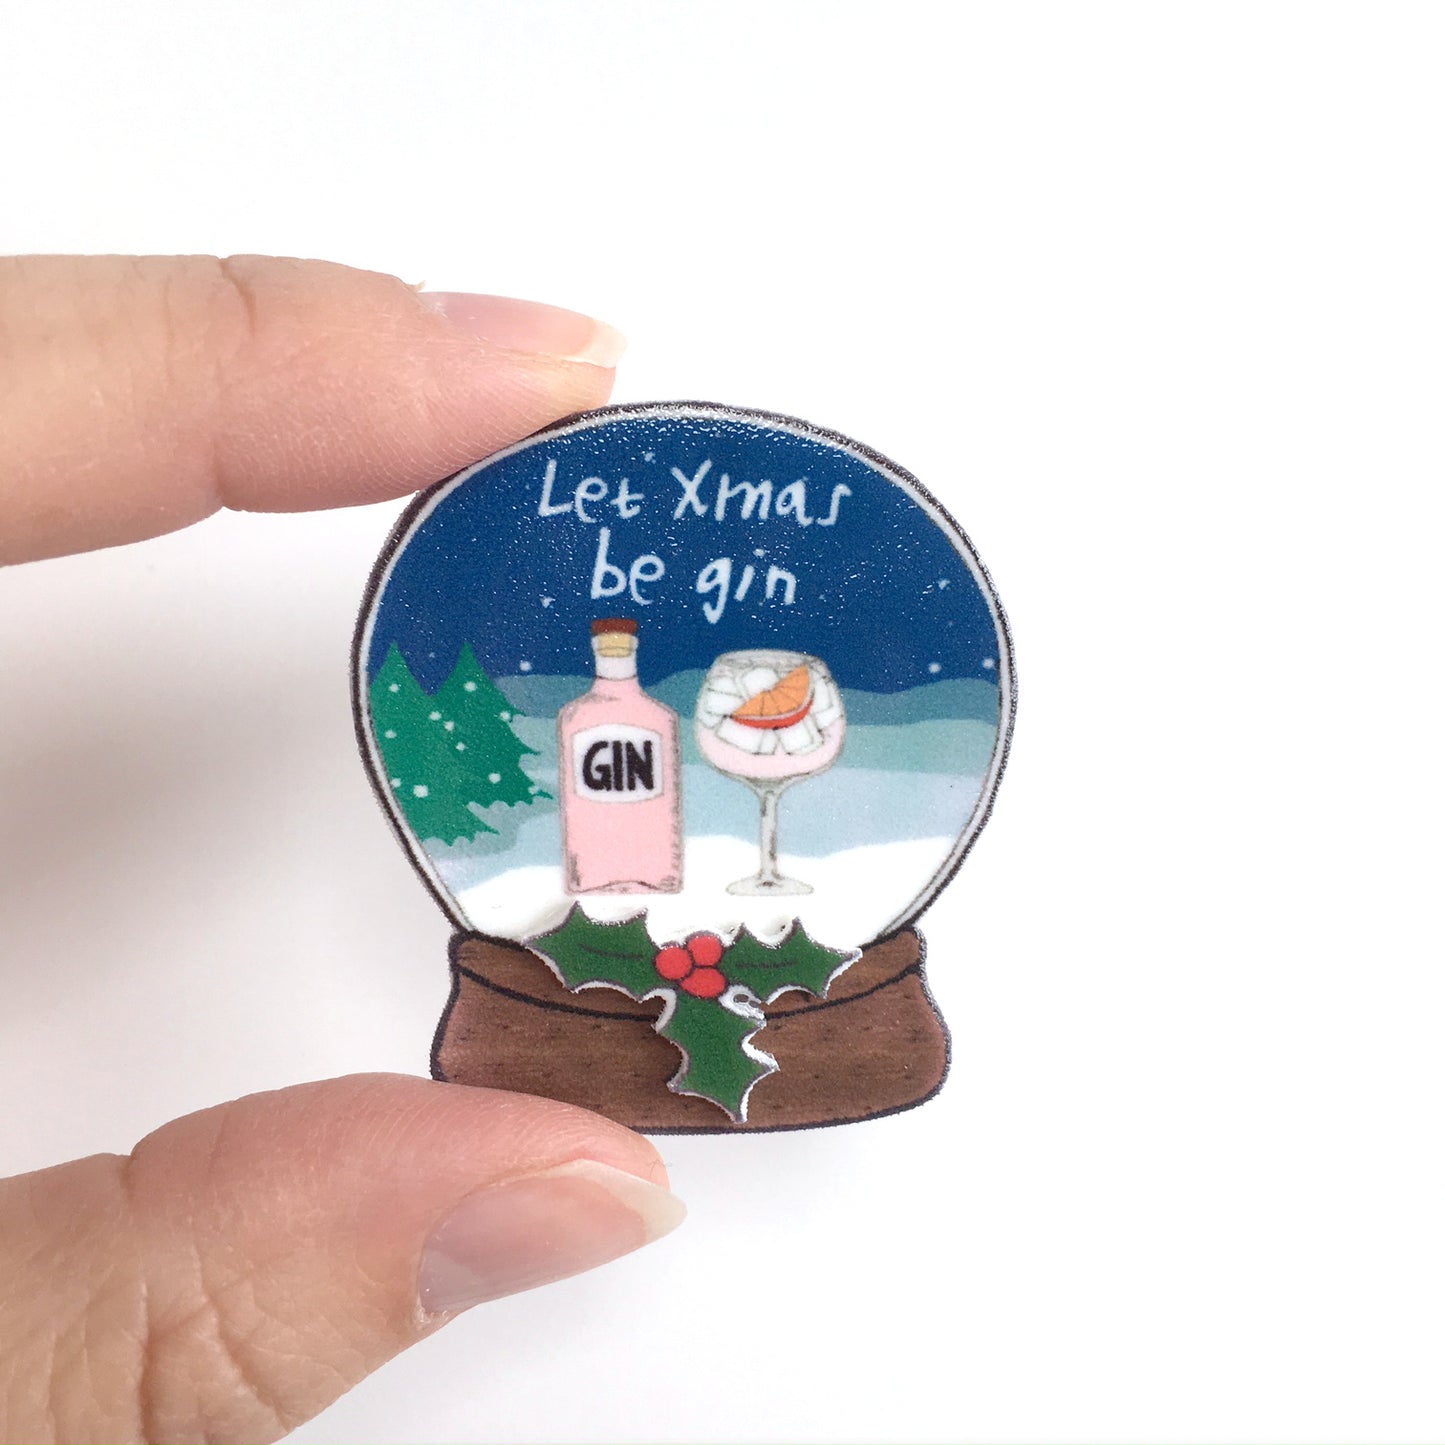 Let Christmas be gin - Snow globe badge stocking filler